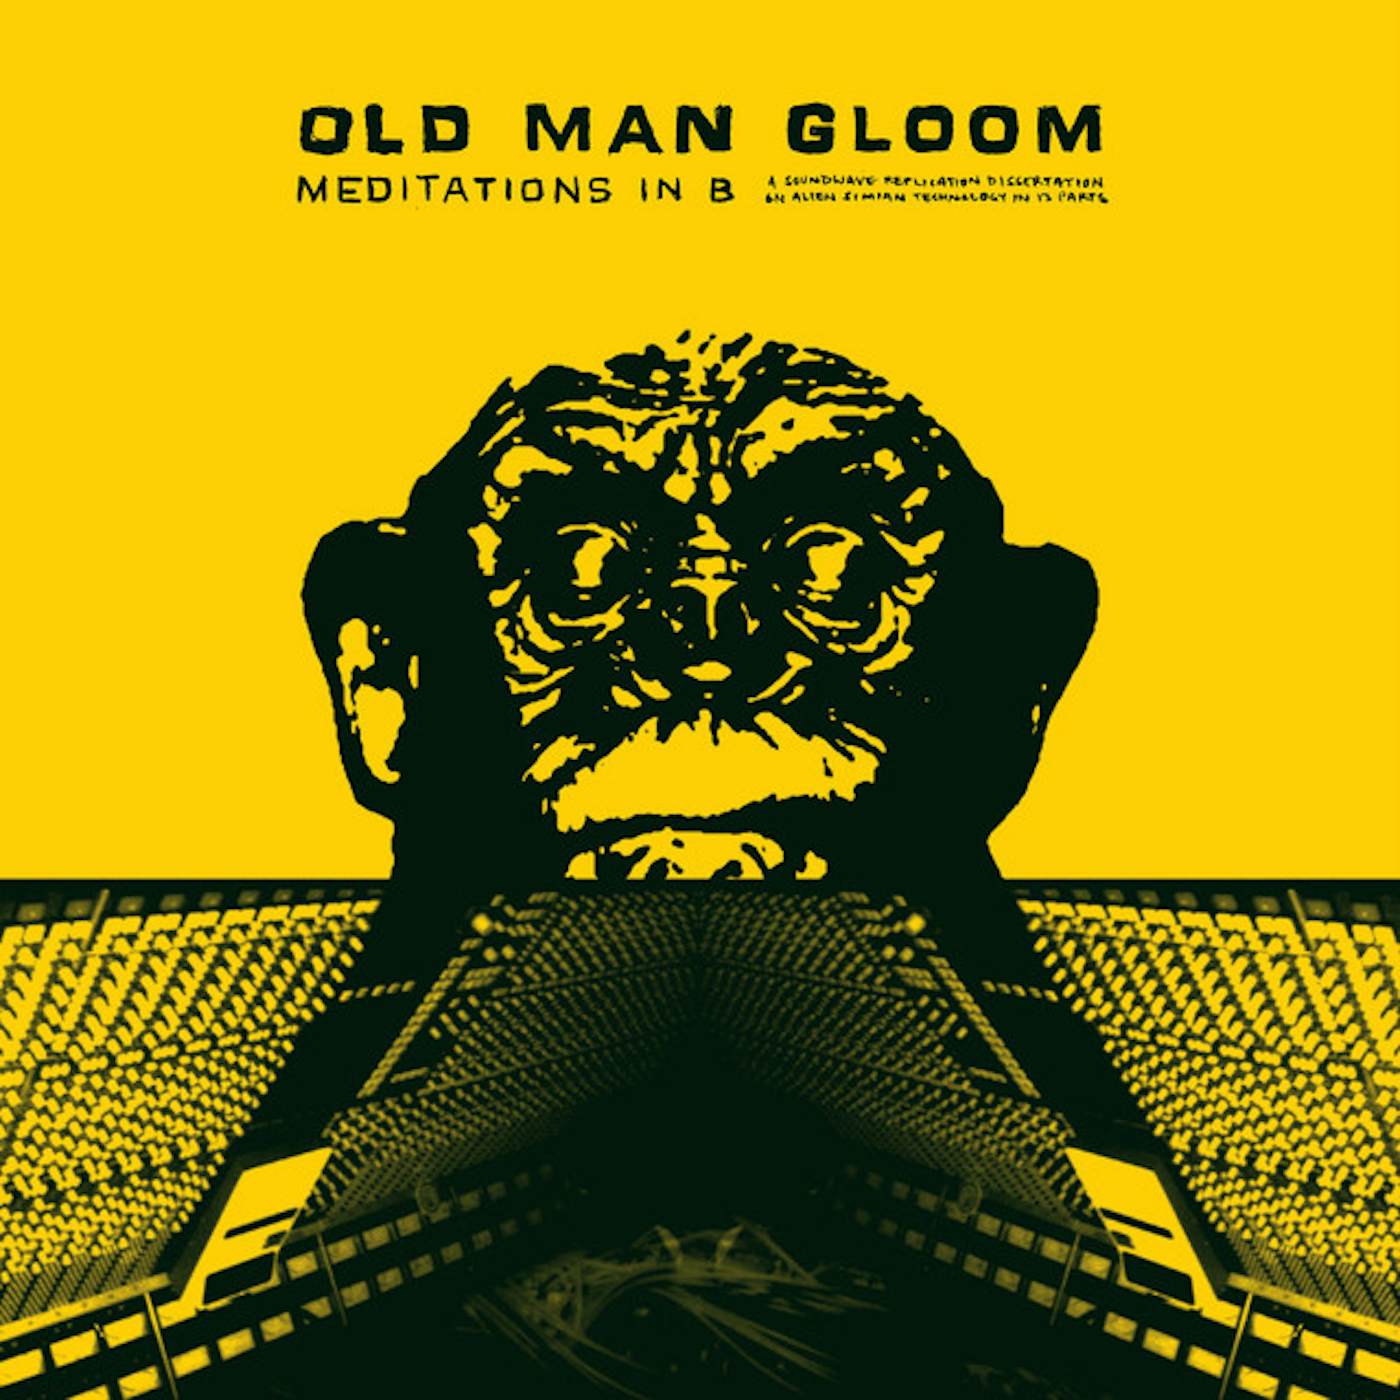 Old Man Gloom Meditations in B Vinyl Record